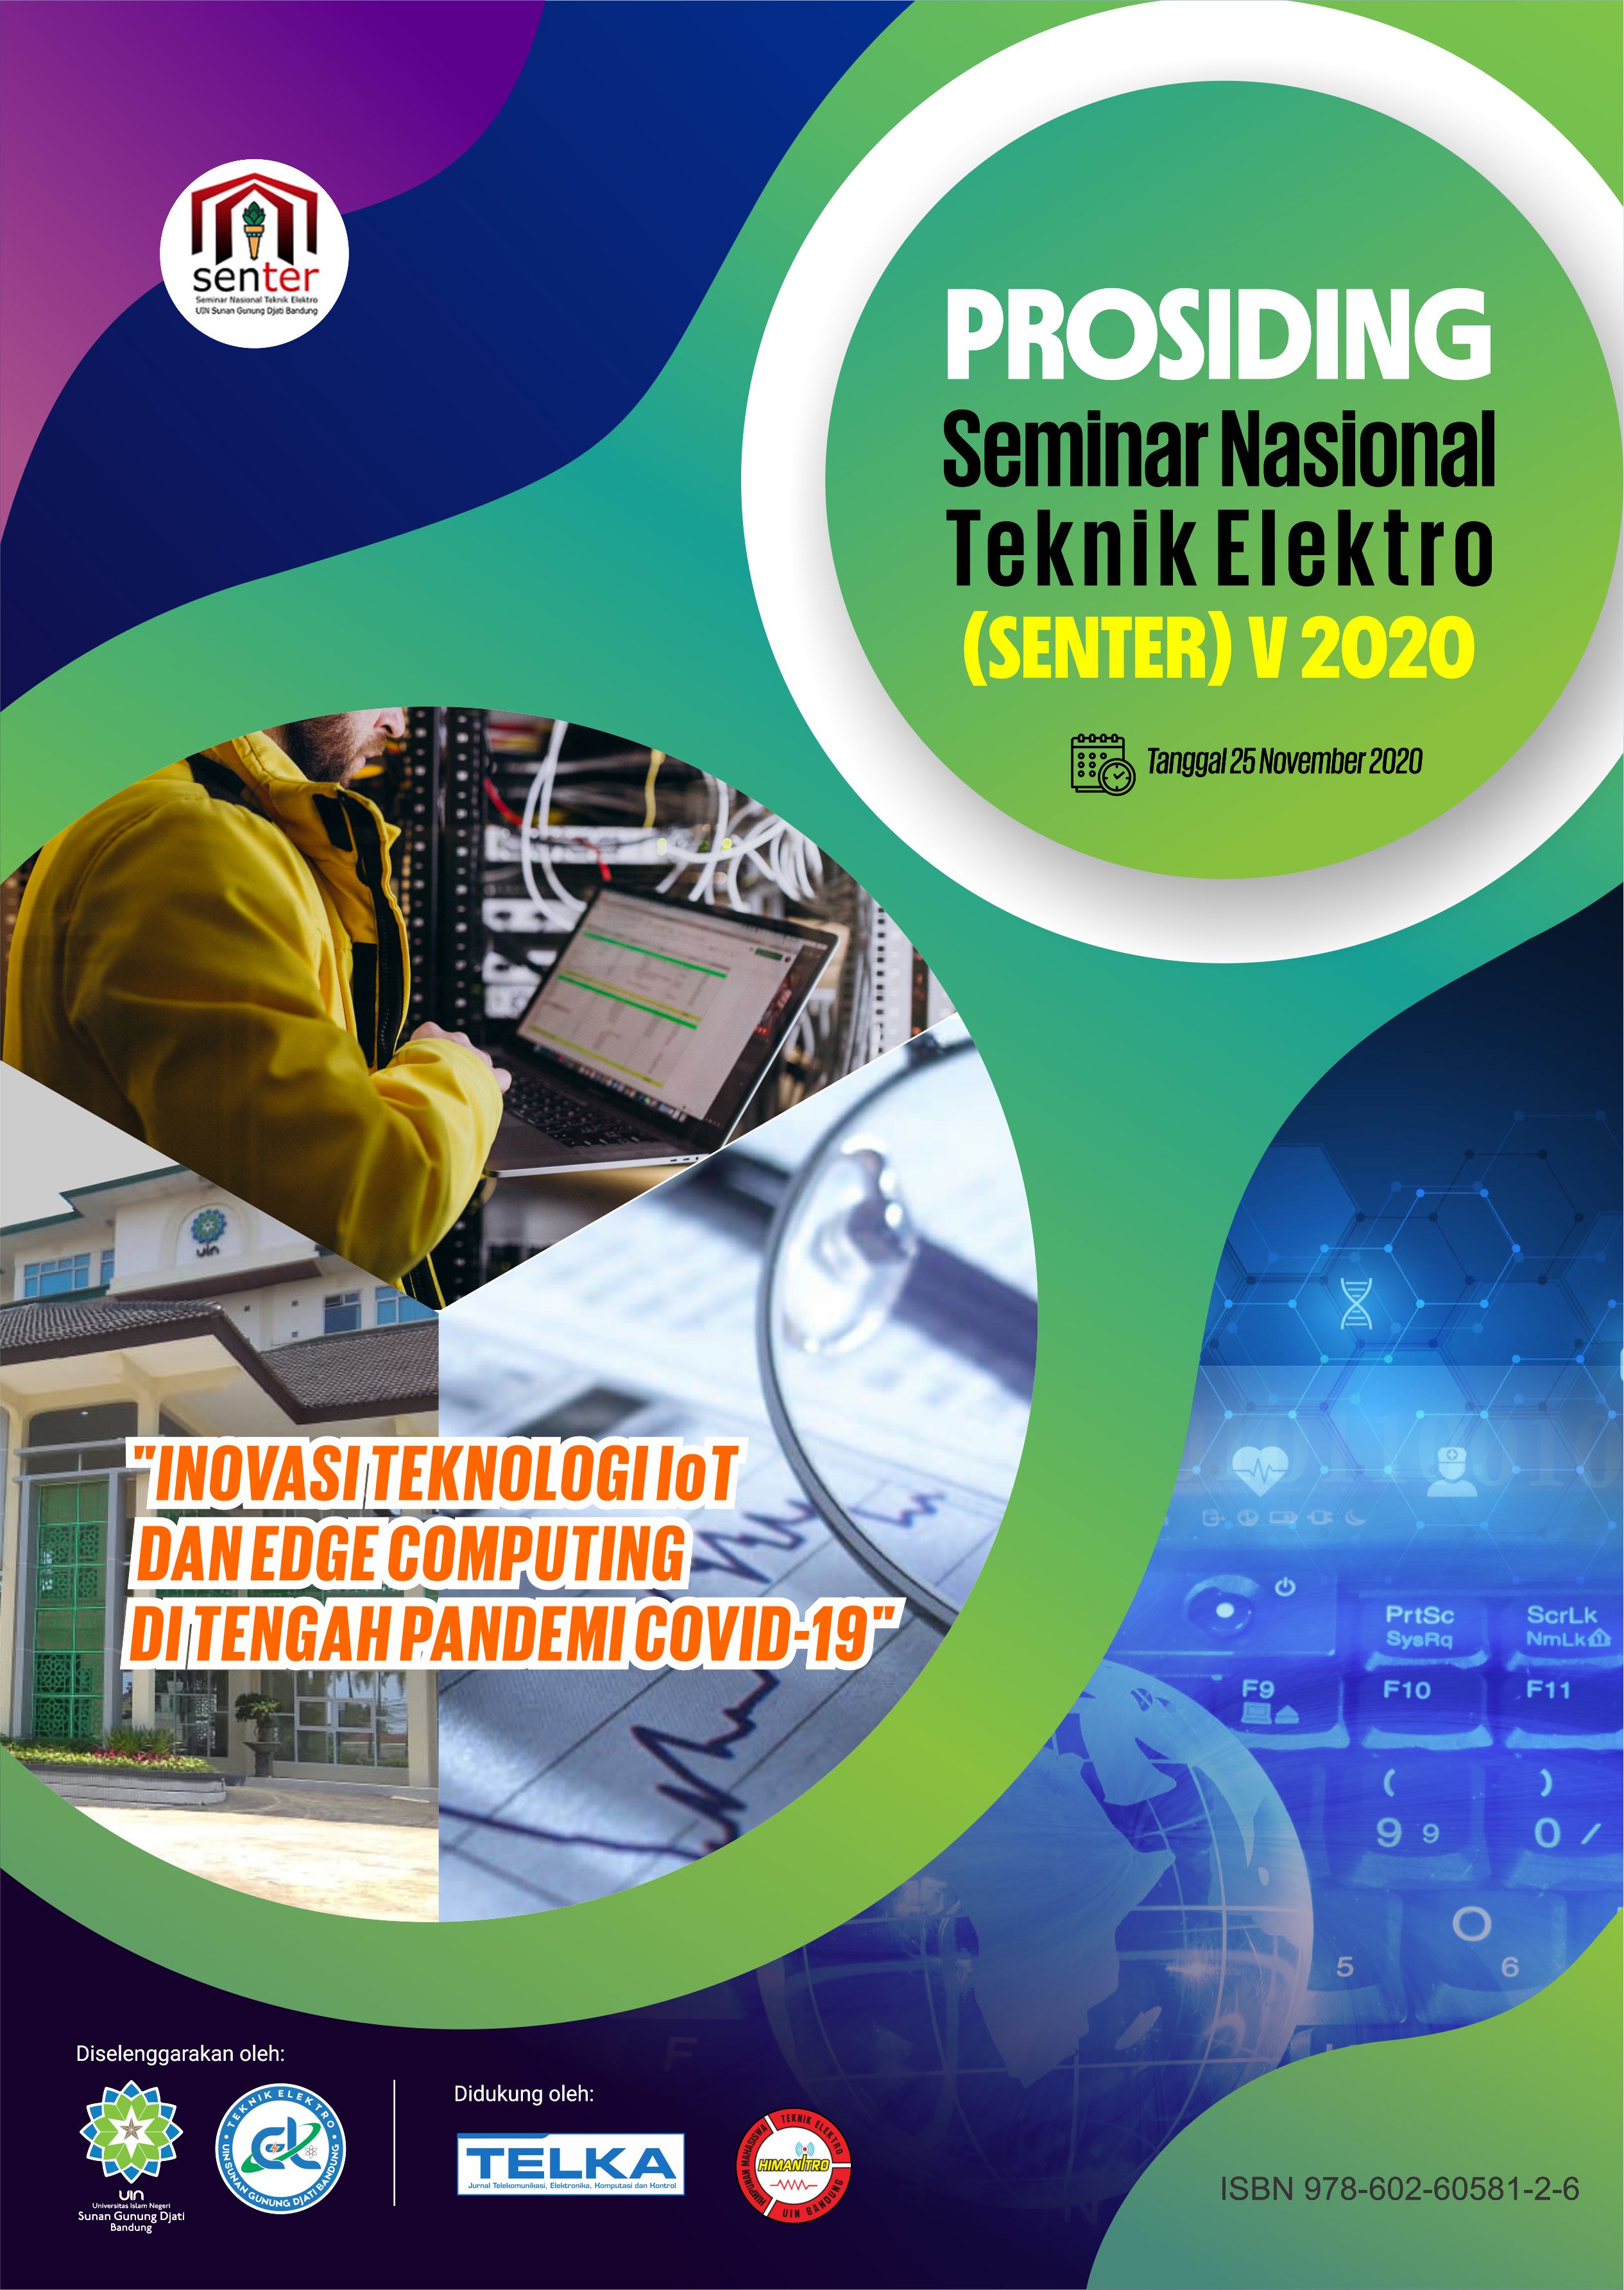 					View Seminar Nasional Teknik Elektro UIN Sunan Gunung Djati Bandung (SENTER 2020)
				